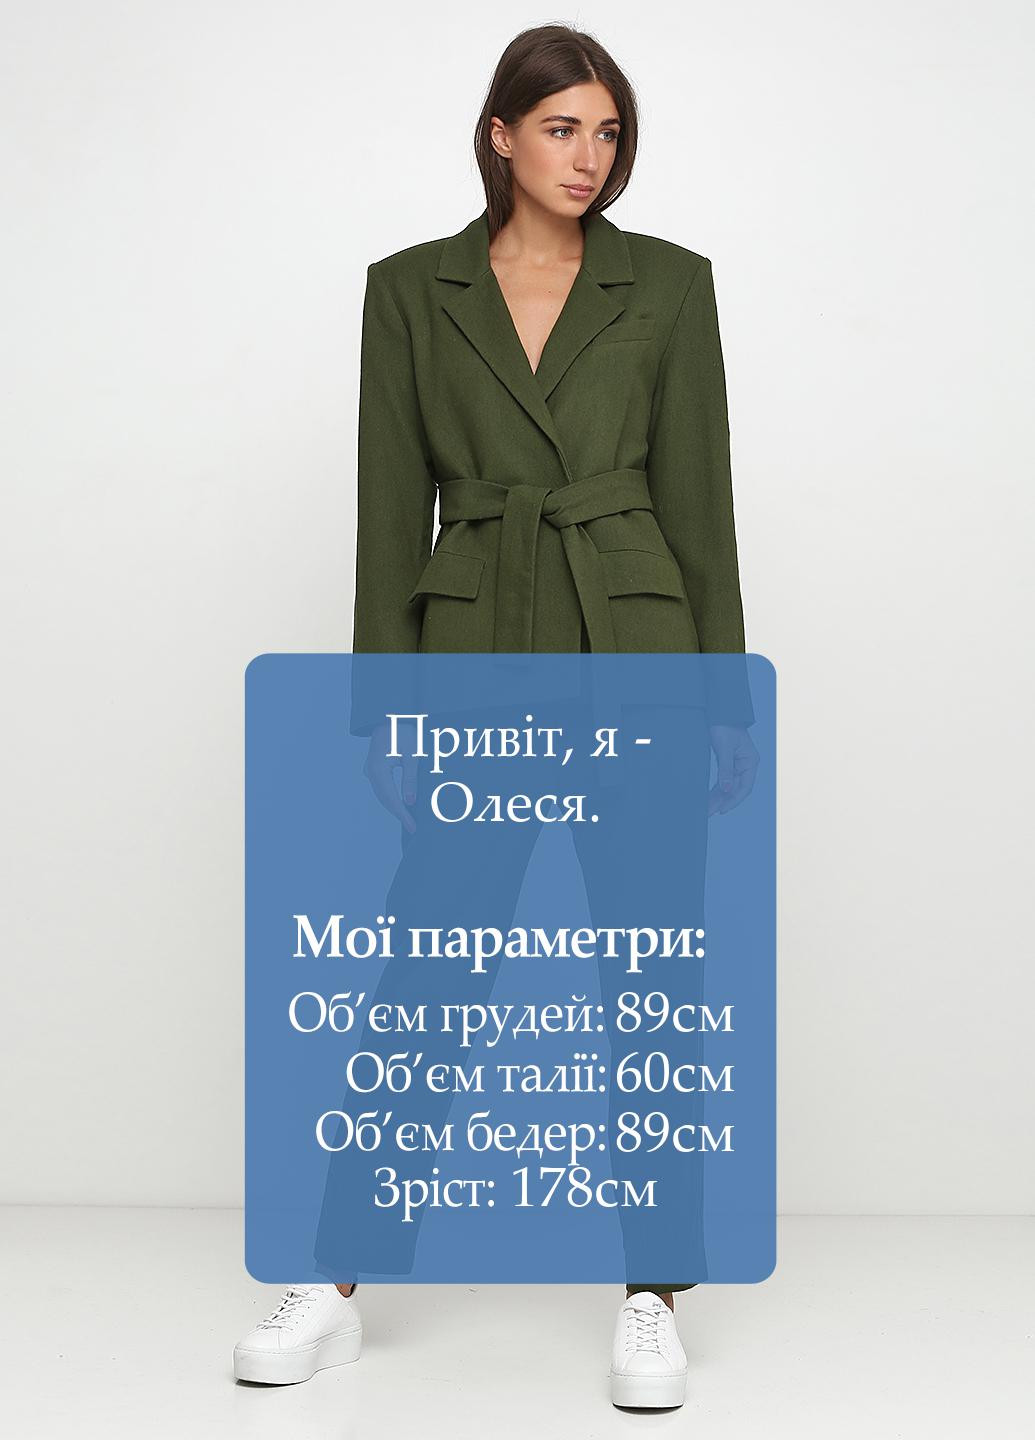 Костюм (жакет, брюки) Kristina Mamedova брючный однотонный оливково-зеленый кэжуал